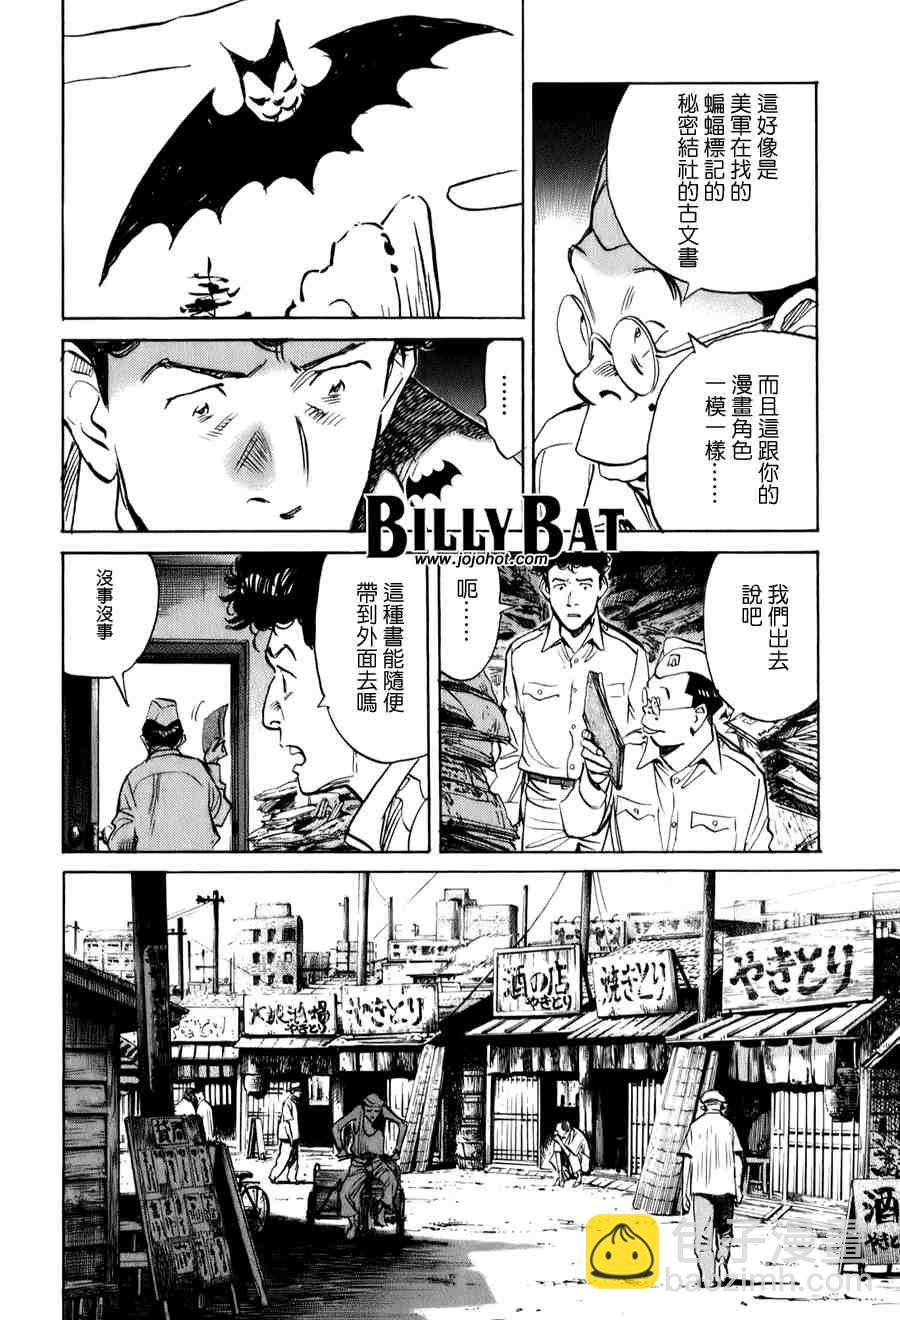 Billy_Bat - 第1卷(2/4) - 2